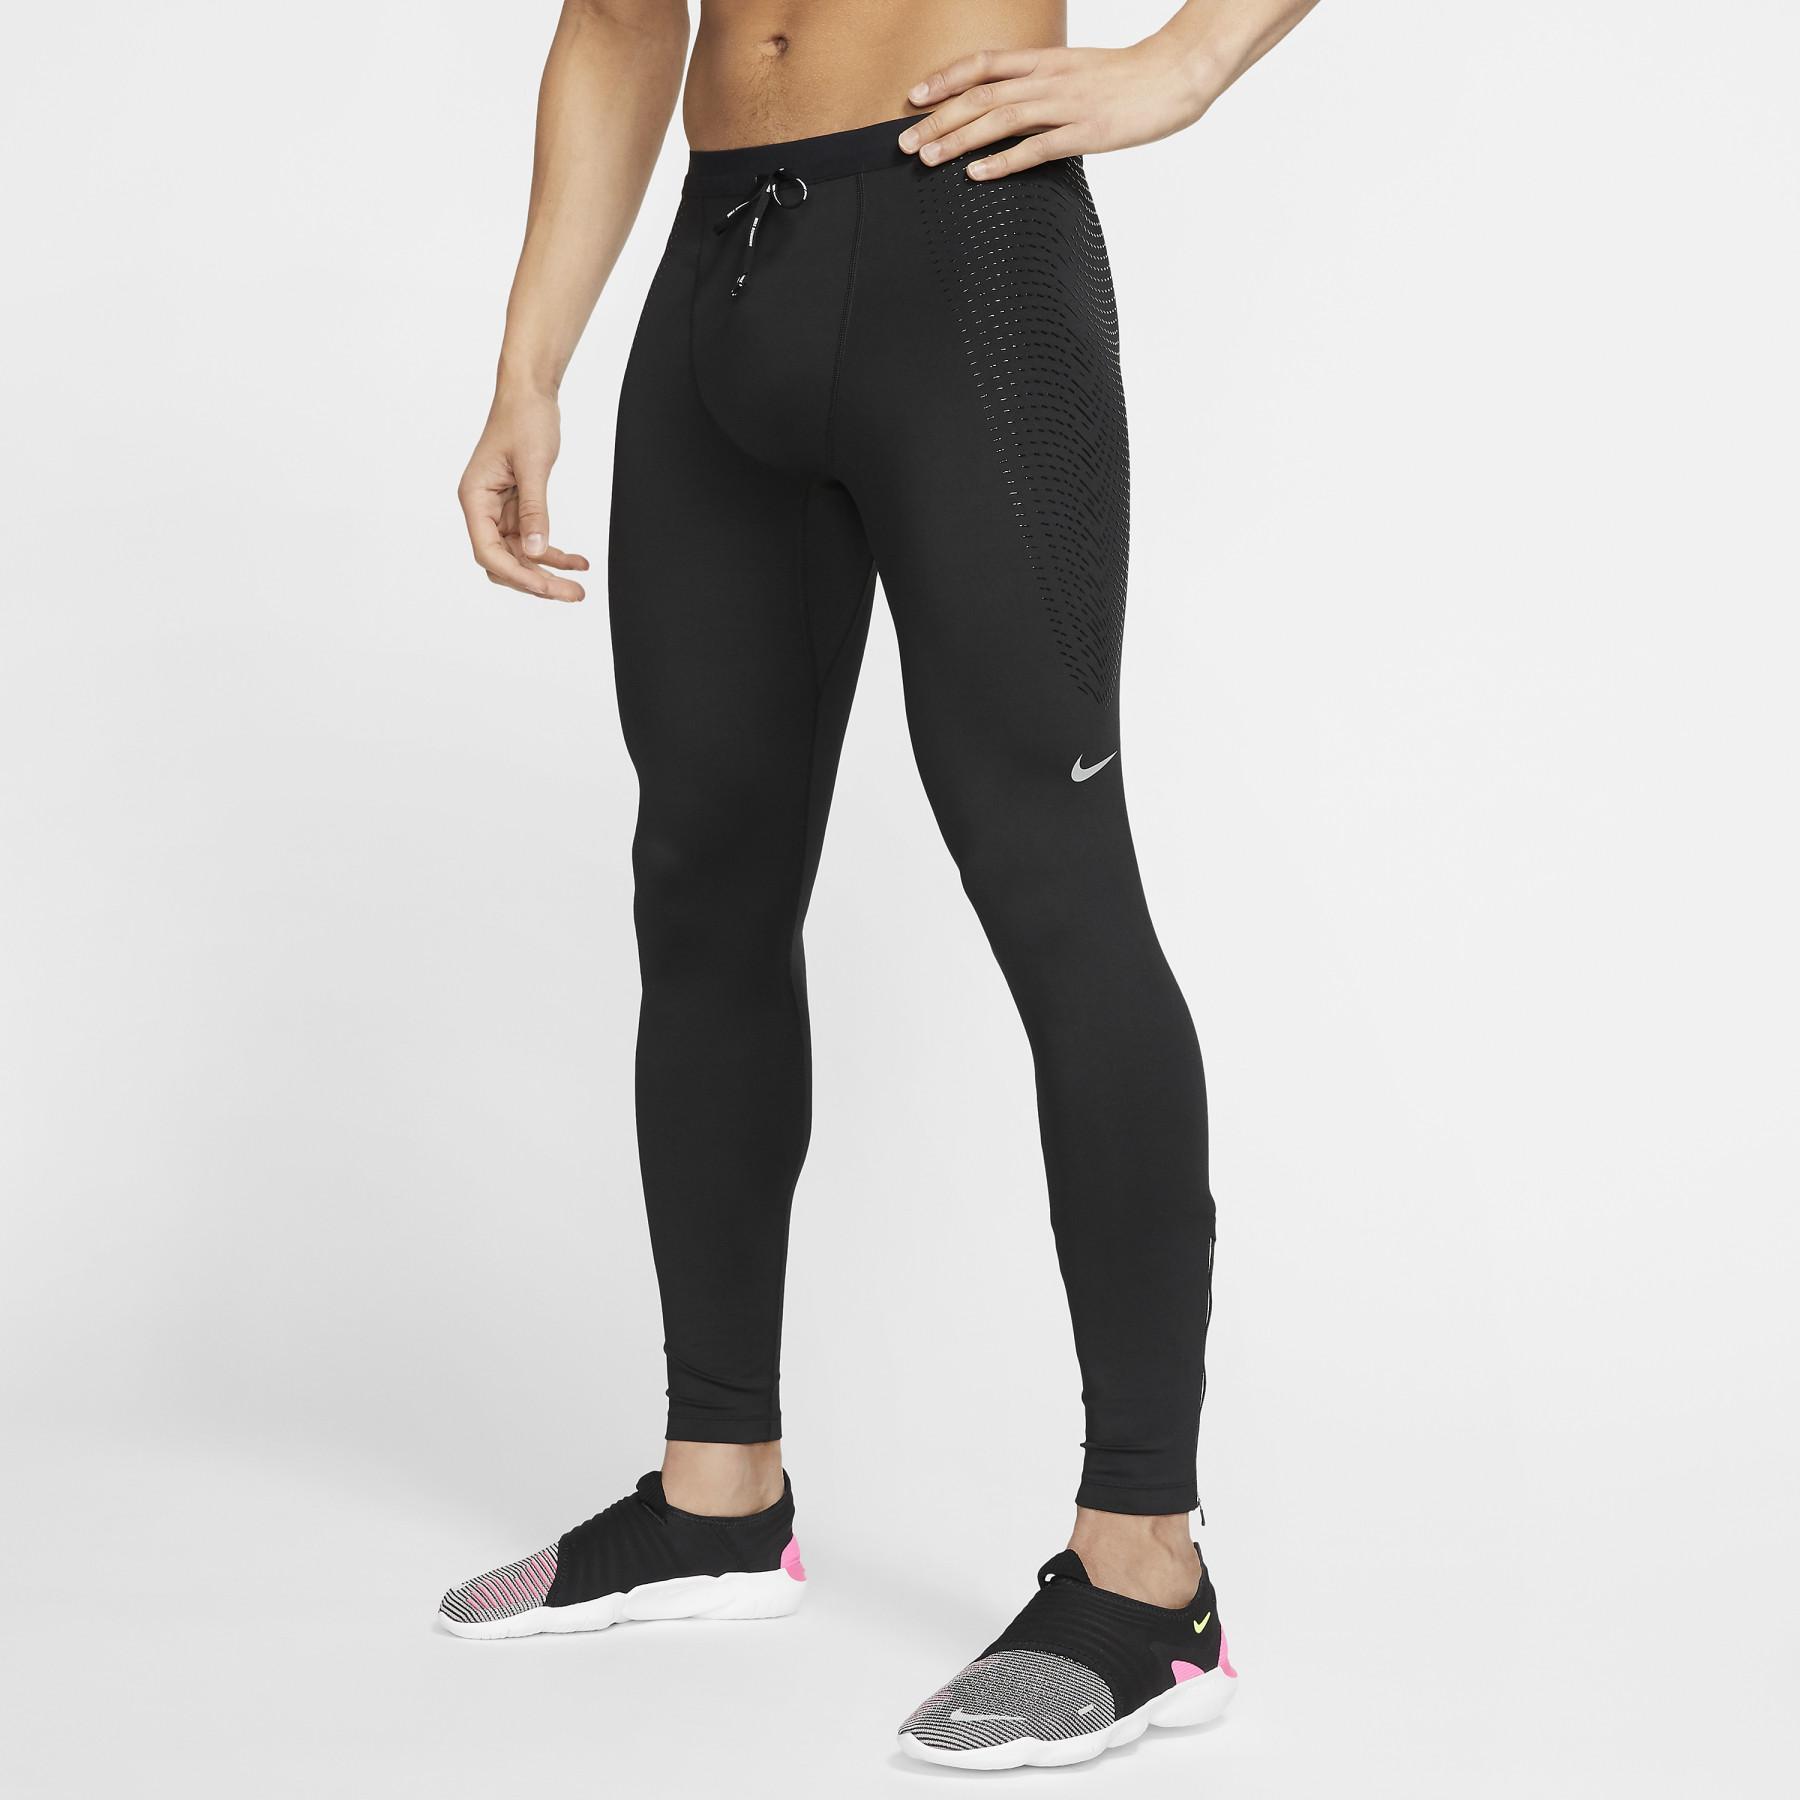 Pants Nike Power - Clothing Running - Running - Physical maintenance